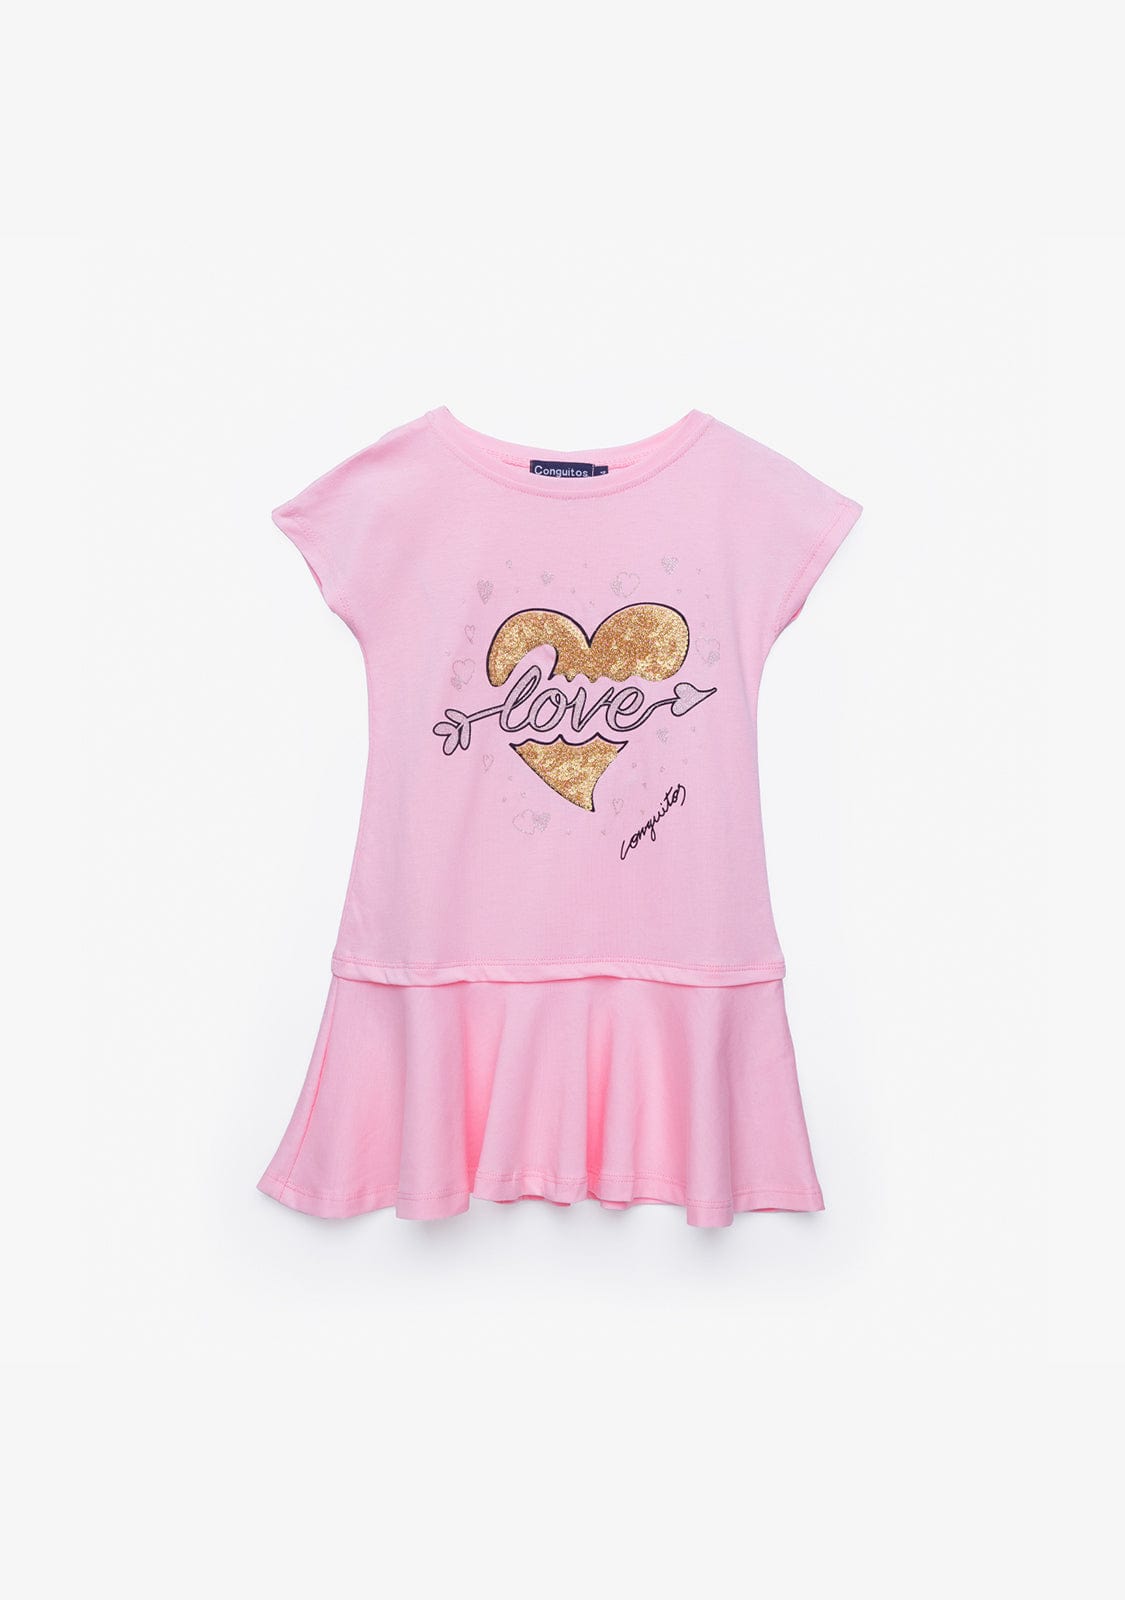 CONGUITOS TEXTIL Clothing Girl's Pink Heart Sequins Dress